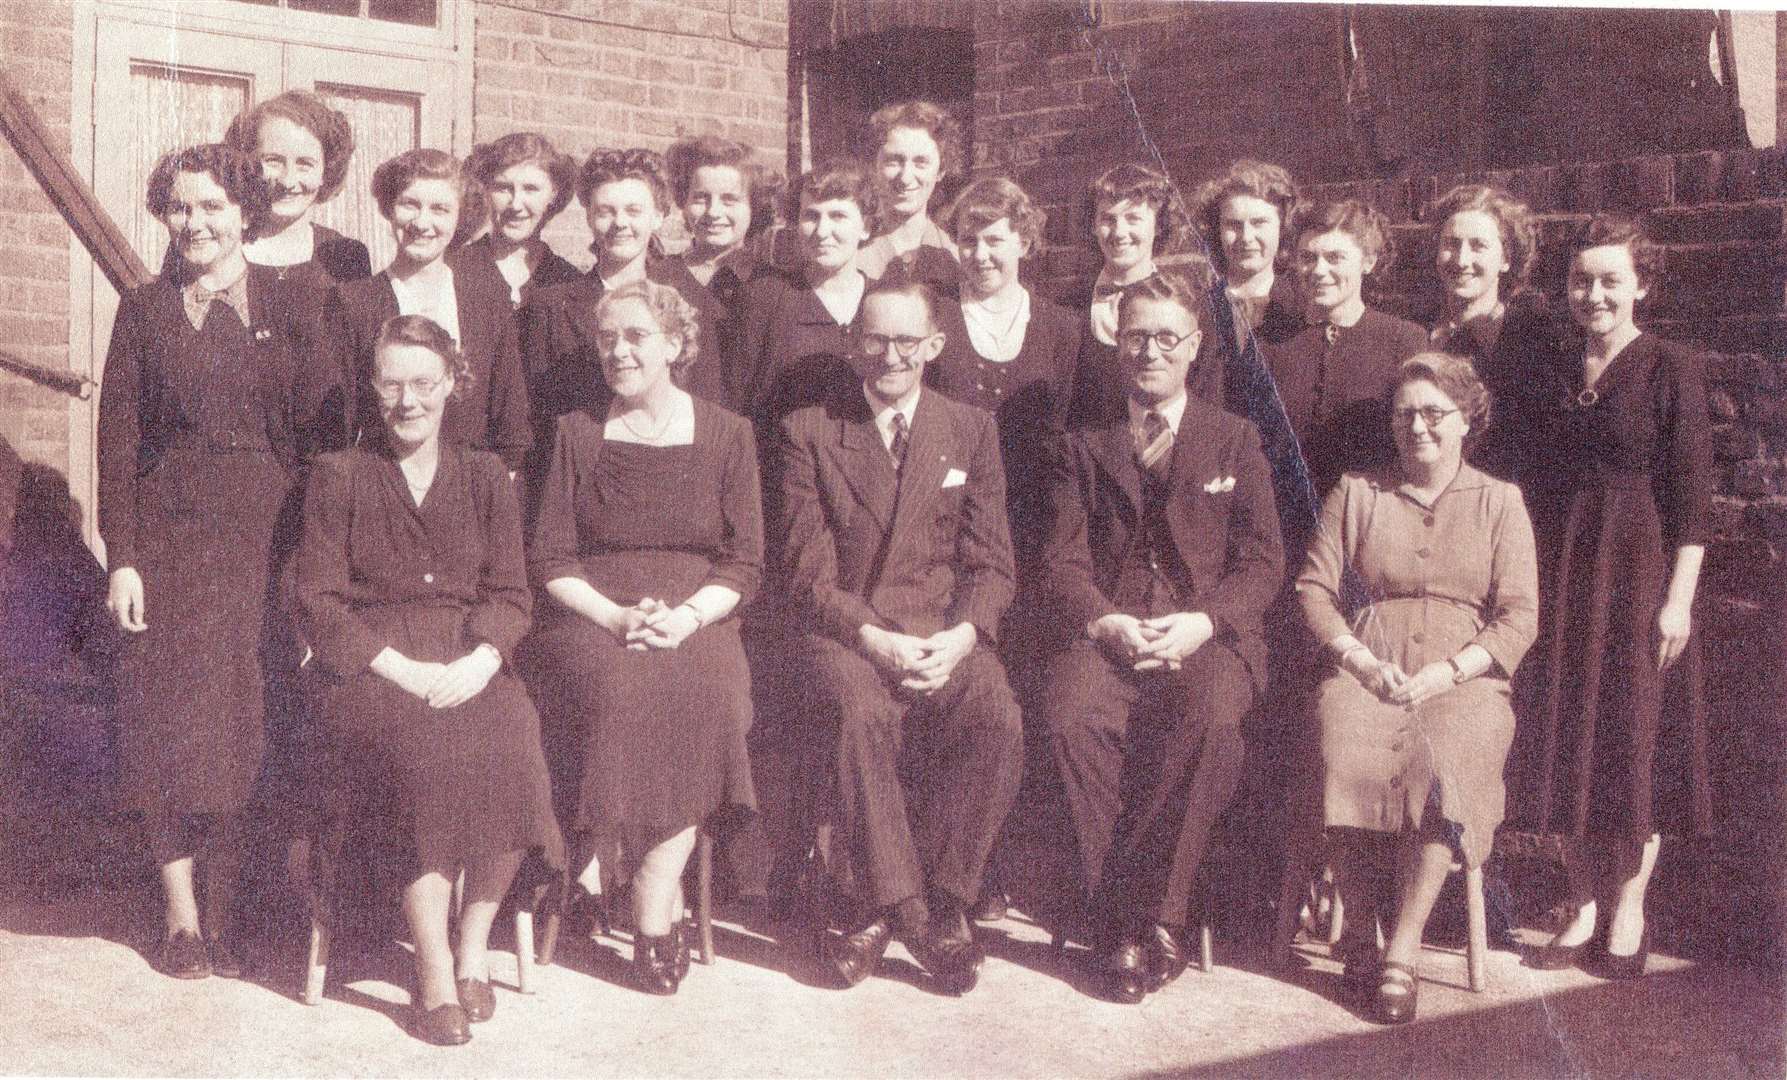 Hulburd's staff in 1946